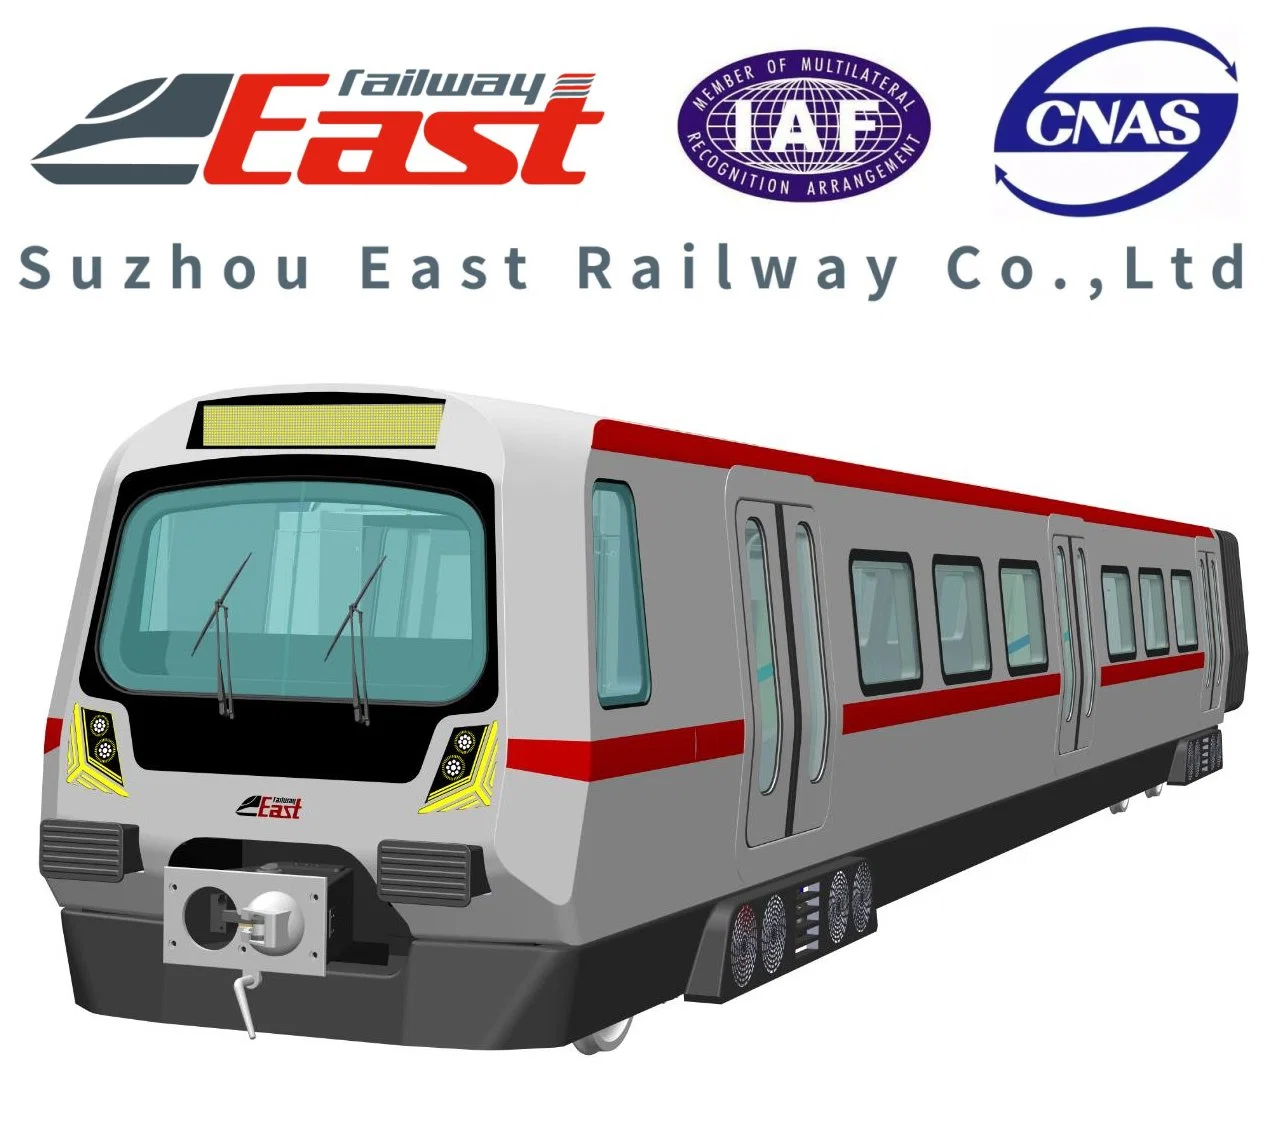 Eastrailway High Quality Muilt Function Railway Passenger Metro Train, Subway